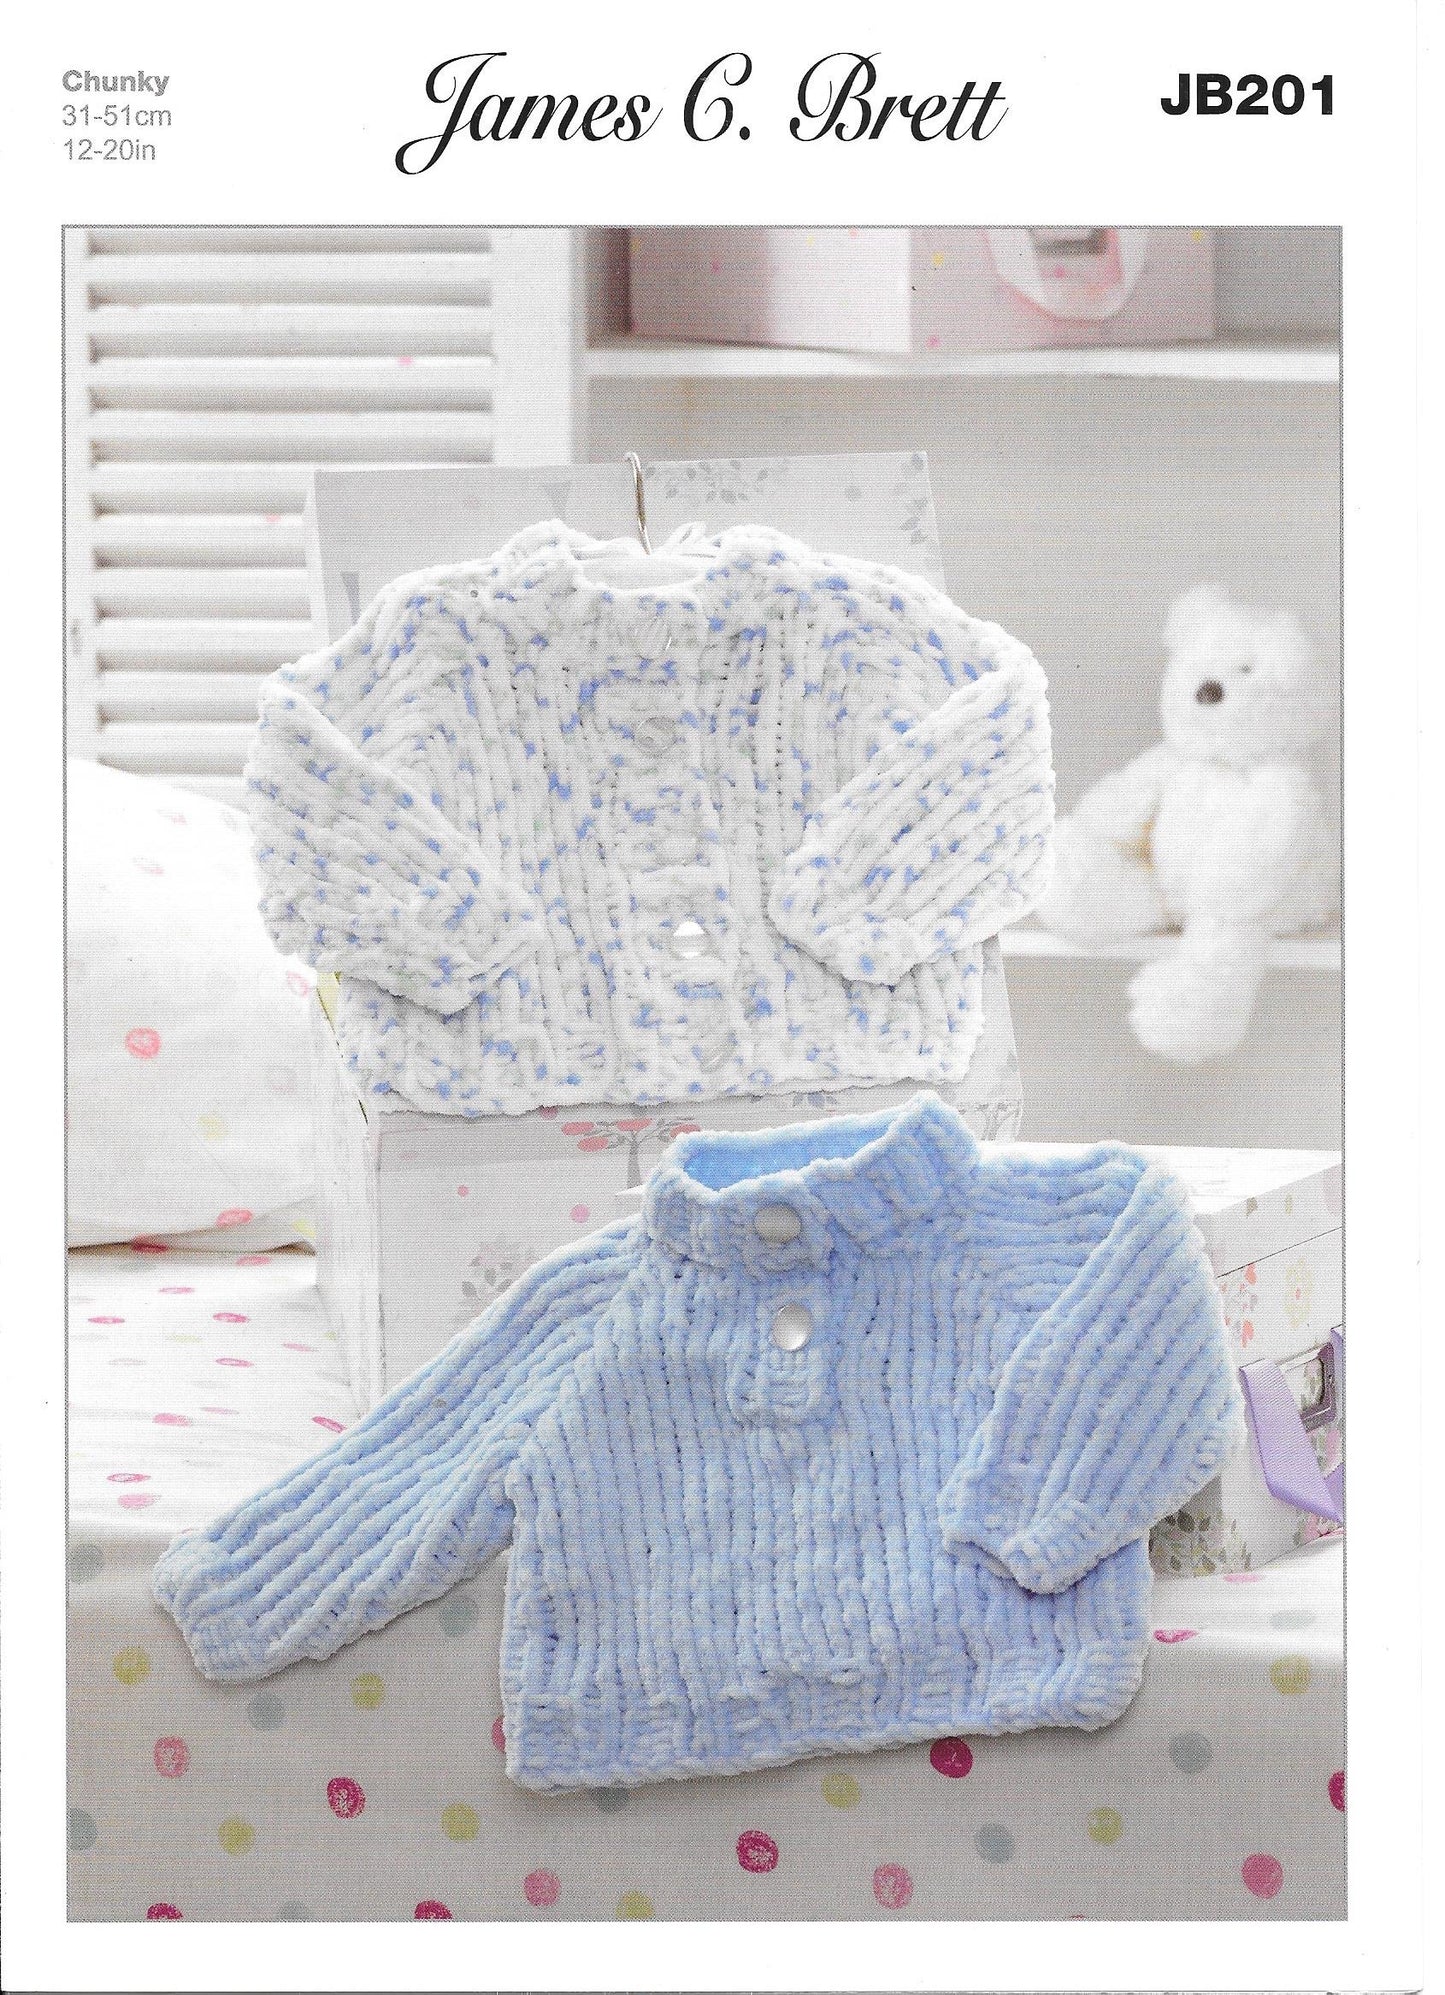 JC201 James C Brett Flutterby Baby Cardigan and Sweater knitting pattern